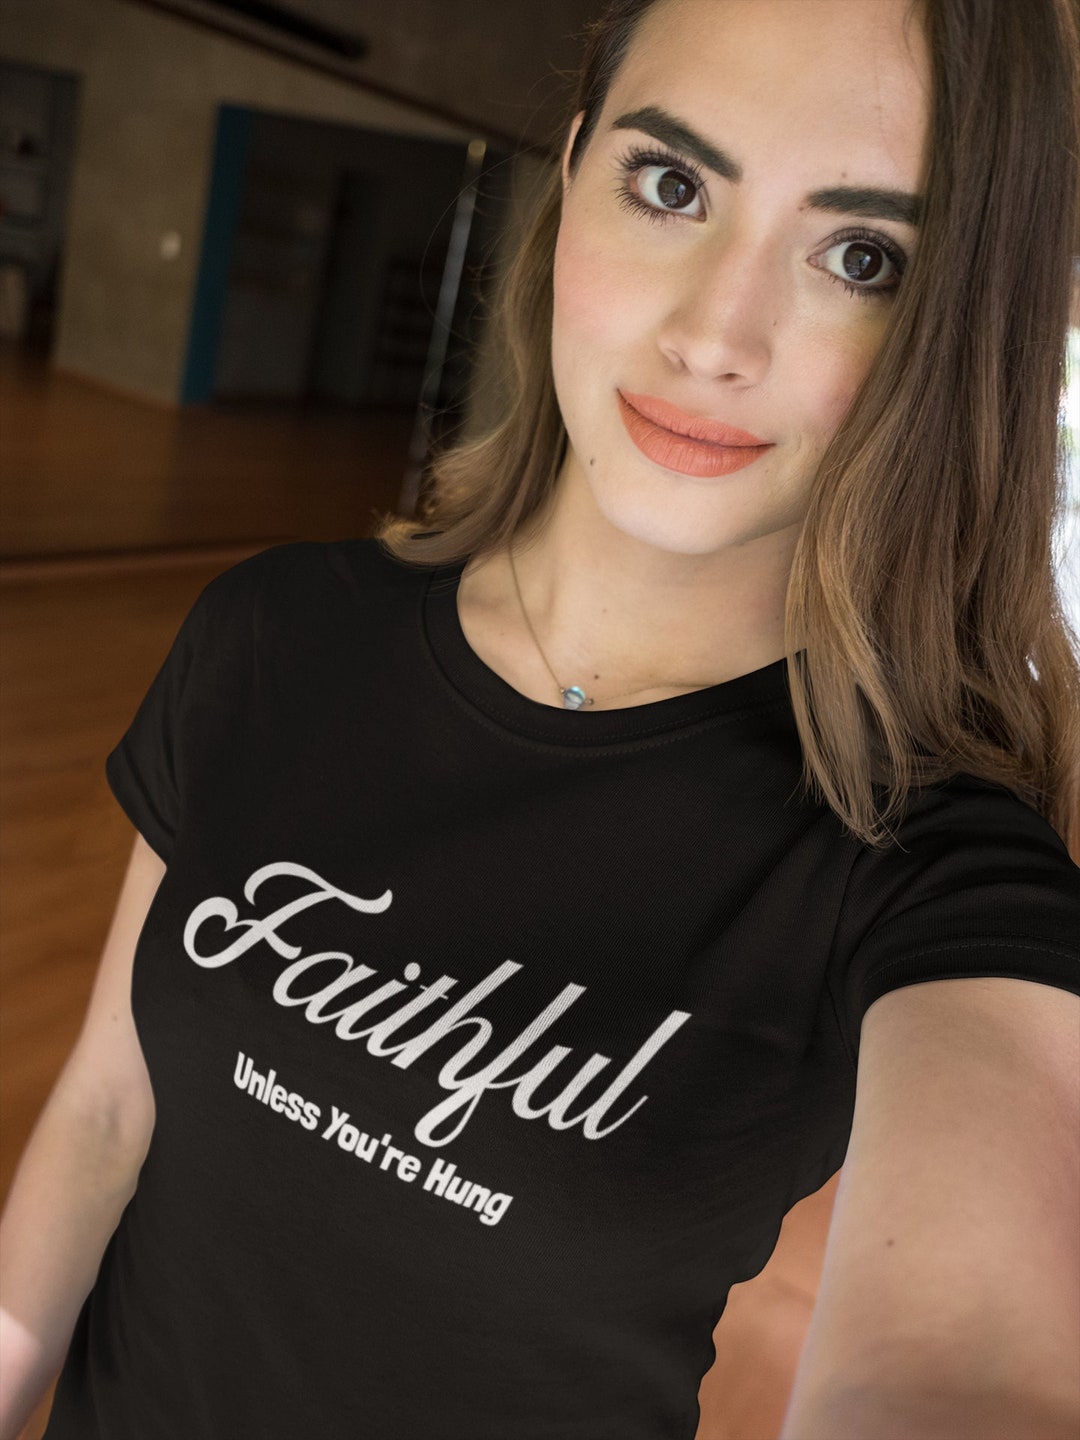 Faithful Unless Youre Hung Shirt Hotwife Slut T-shirt